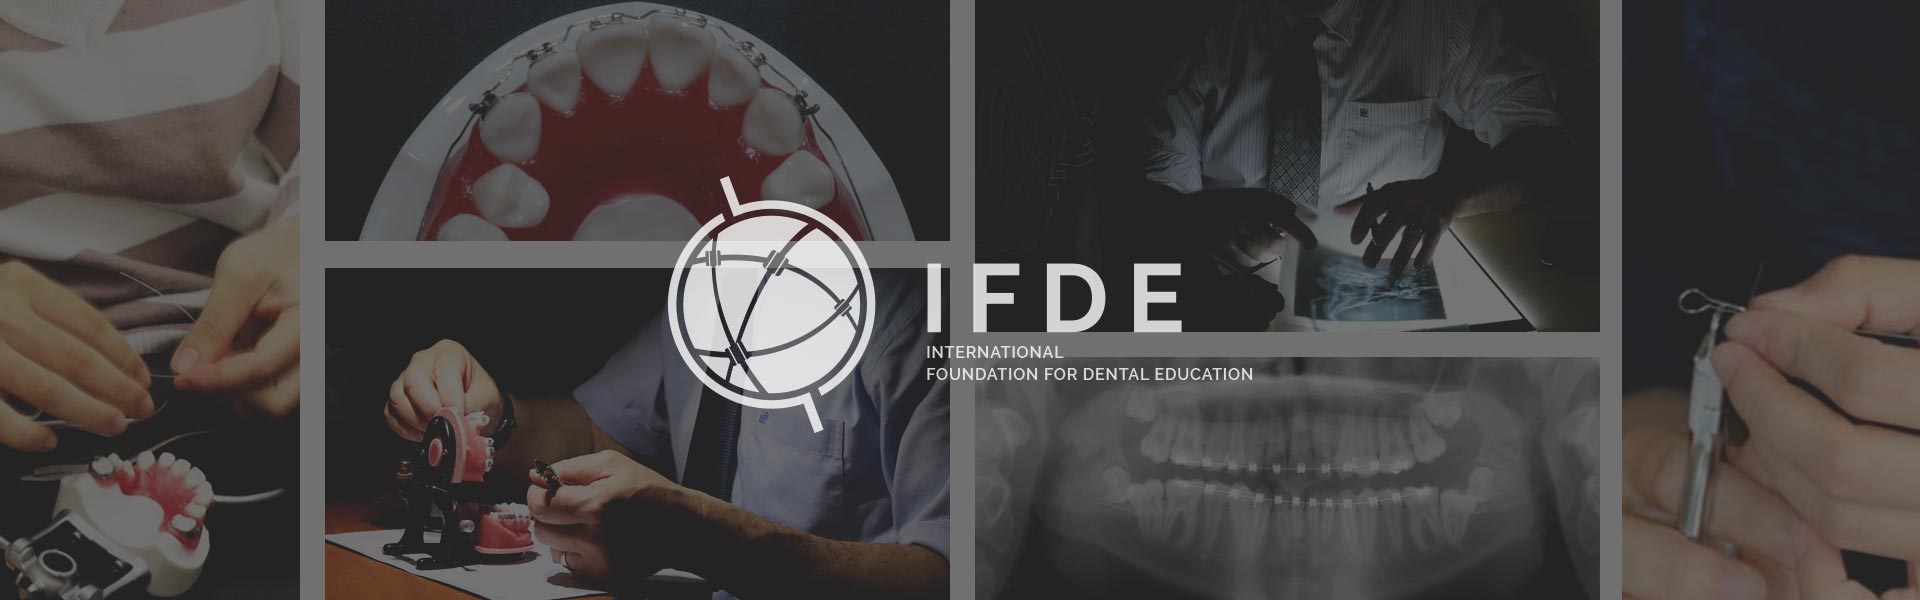 International Foundation for Dental Education (IFDE)